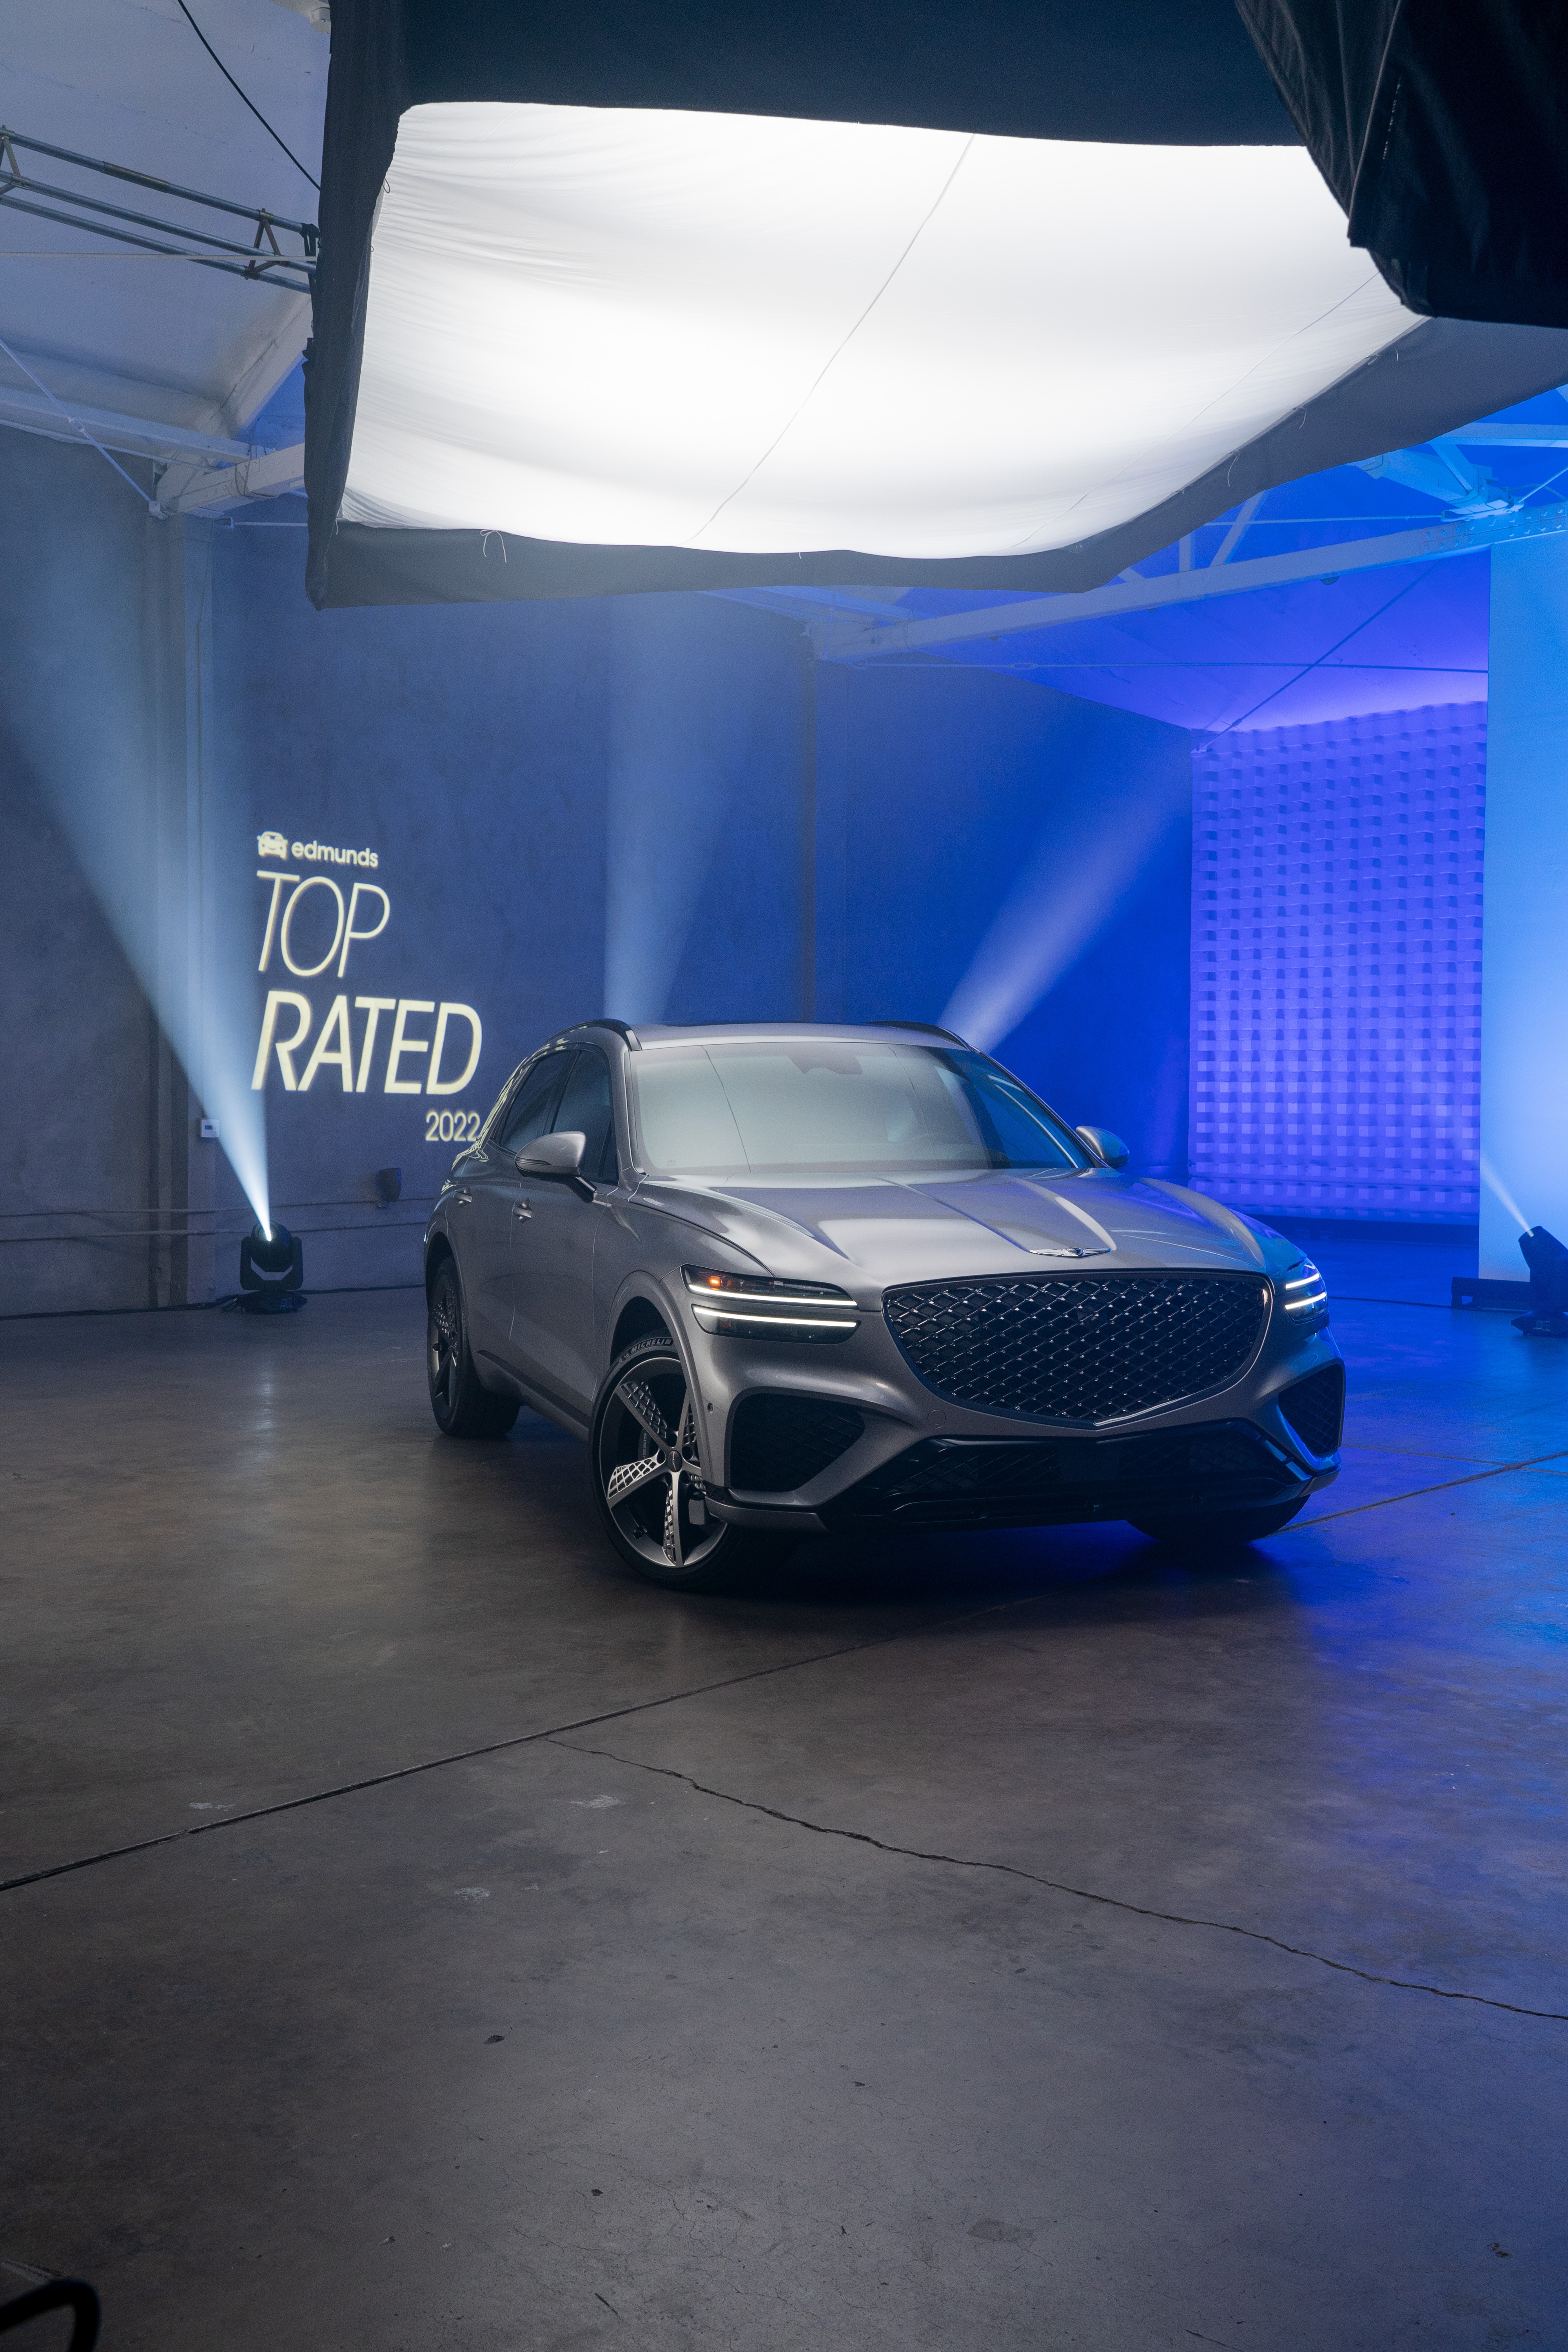 2022 Genesis GV70 - Edmunds Top Rated Luxury SUV